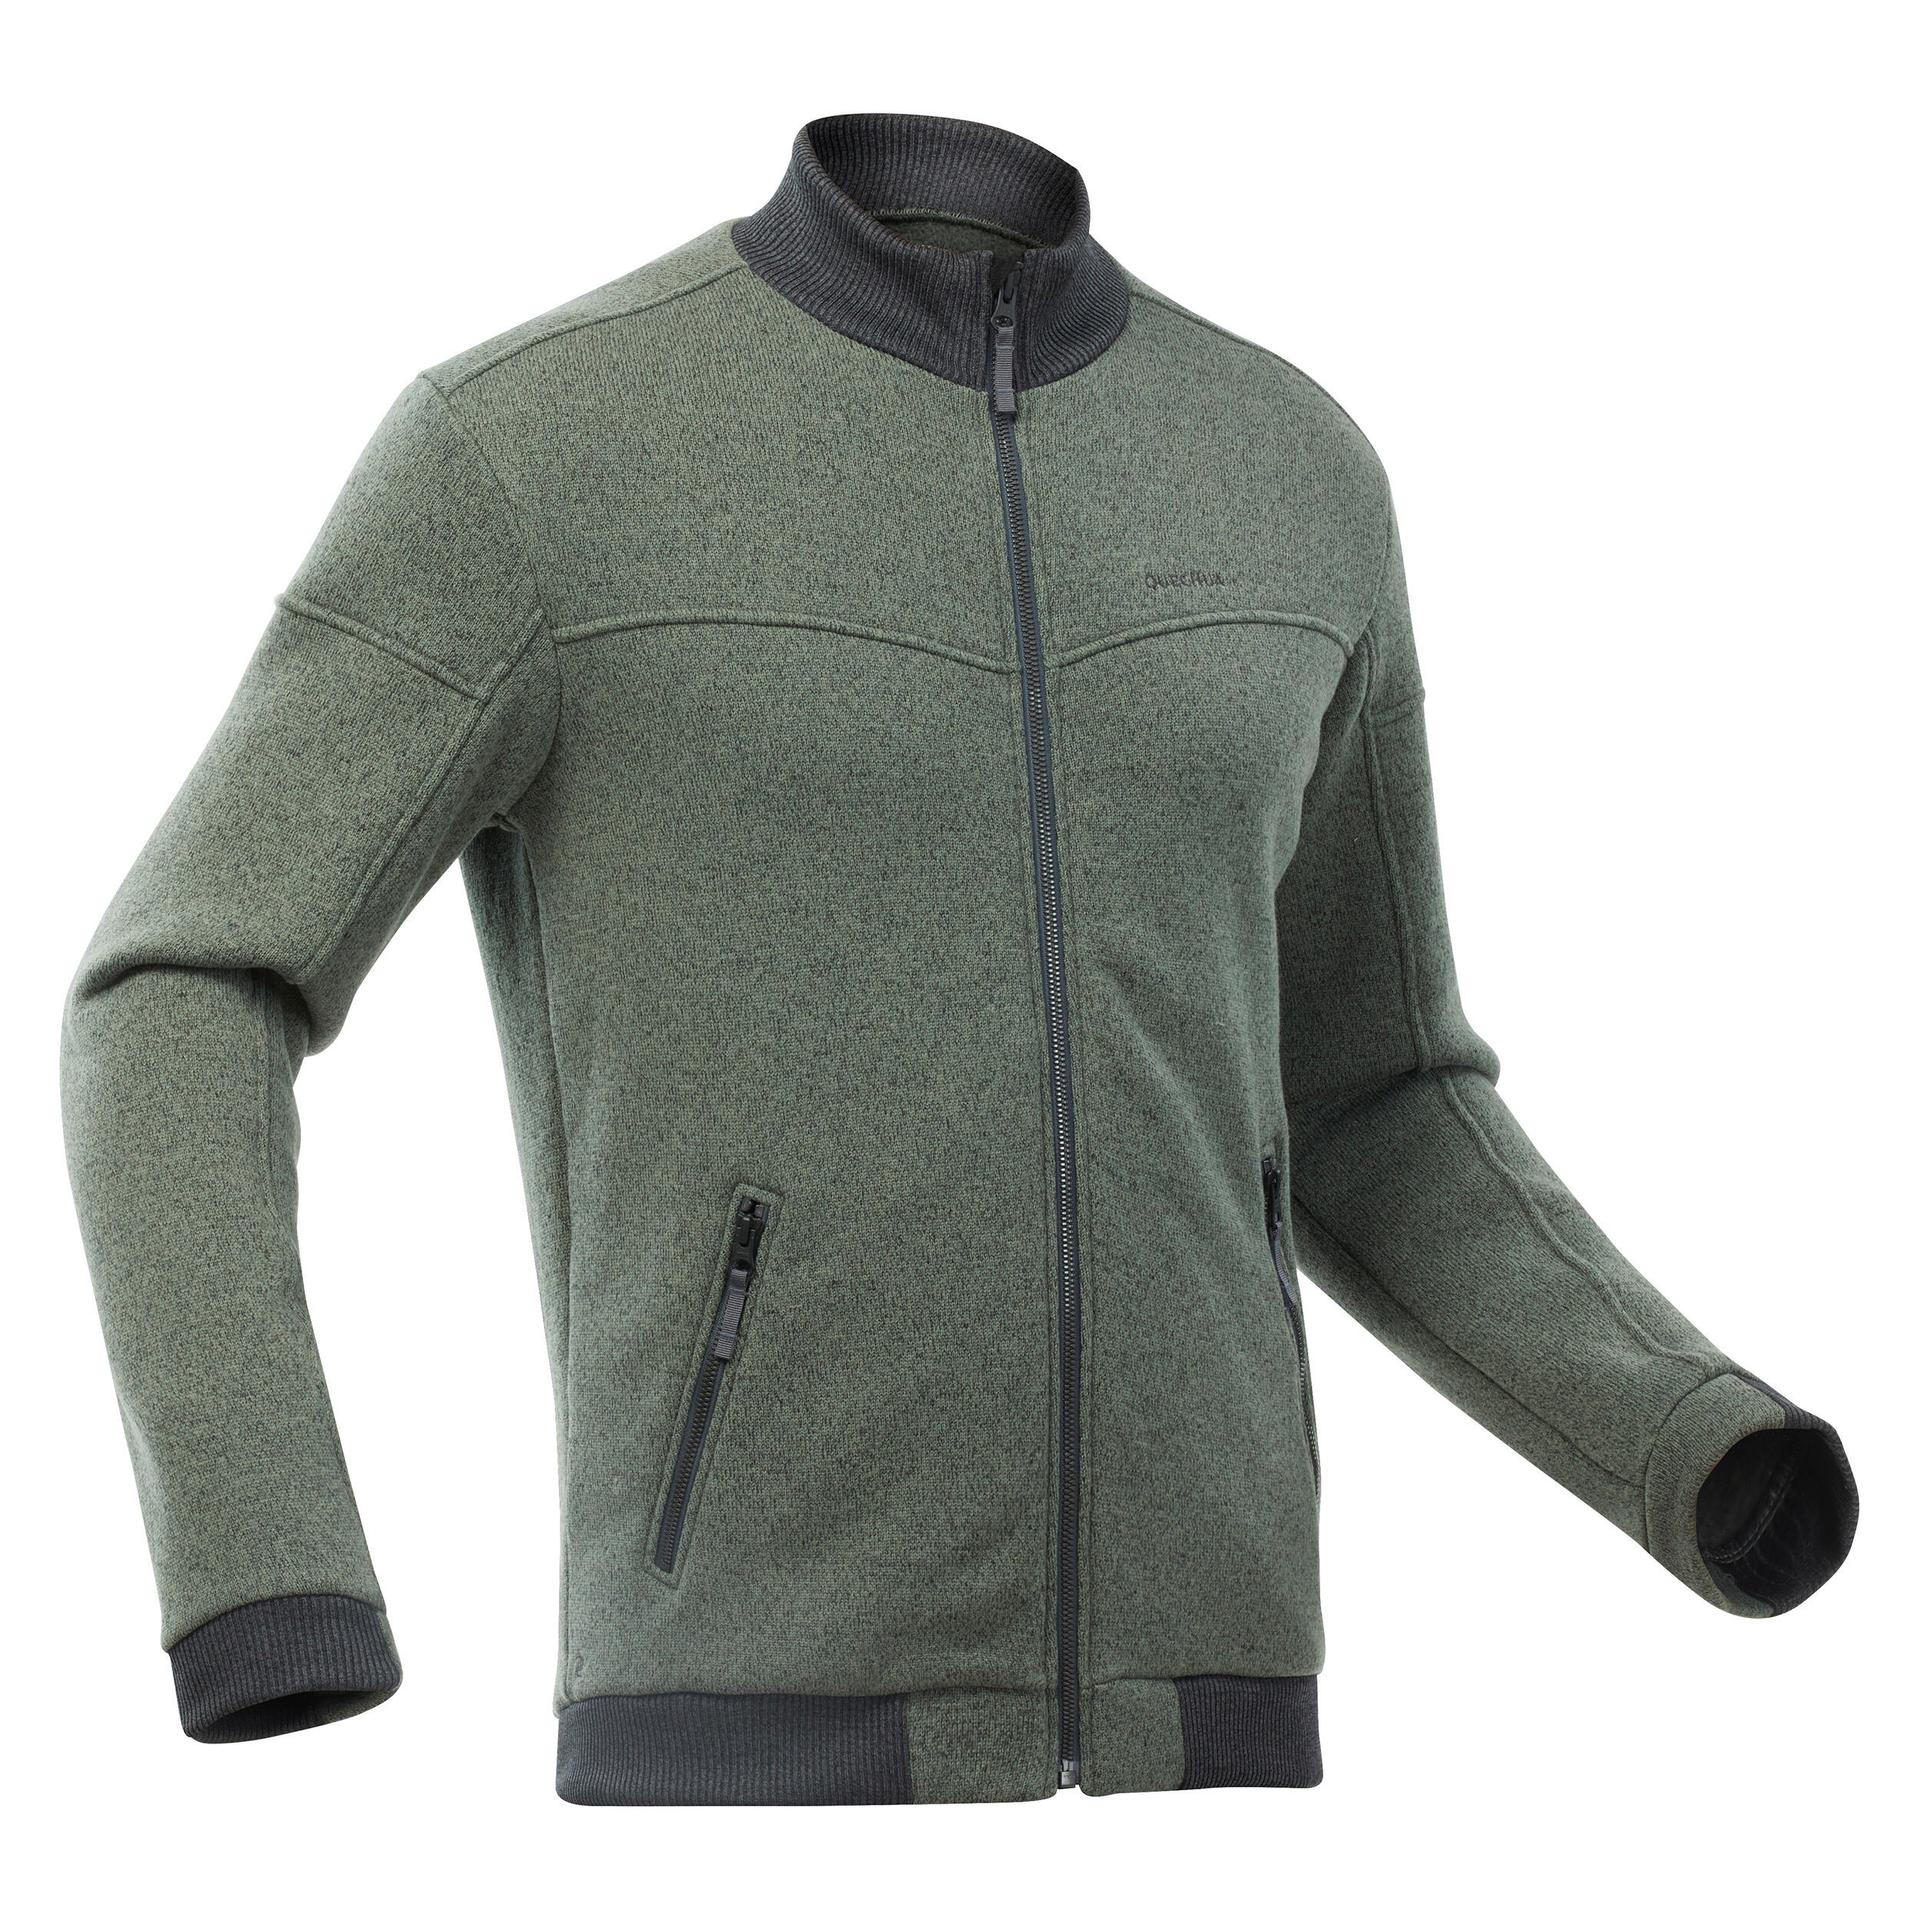 men's warm fleece hiking jacket - sh100